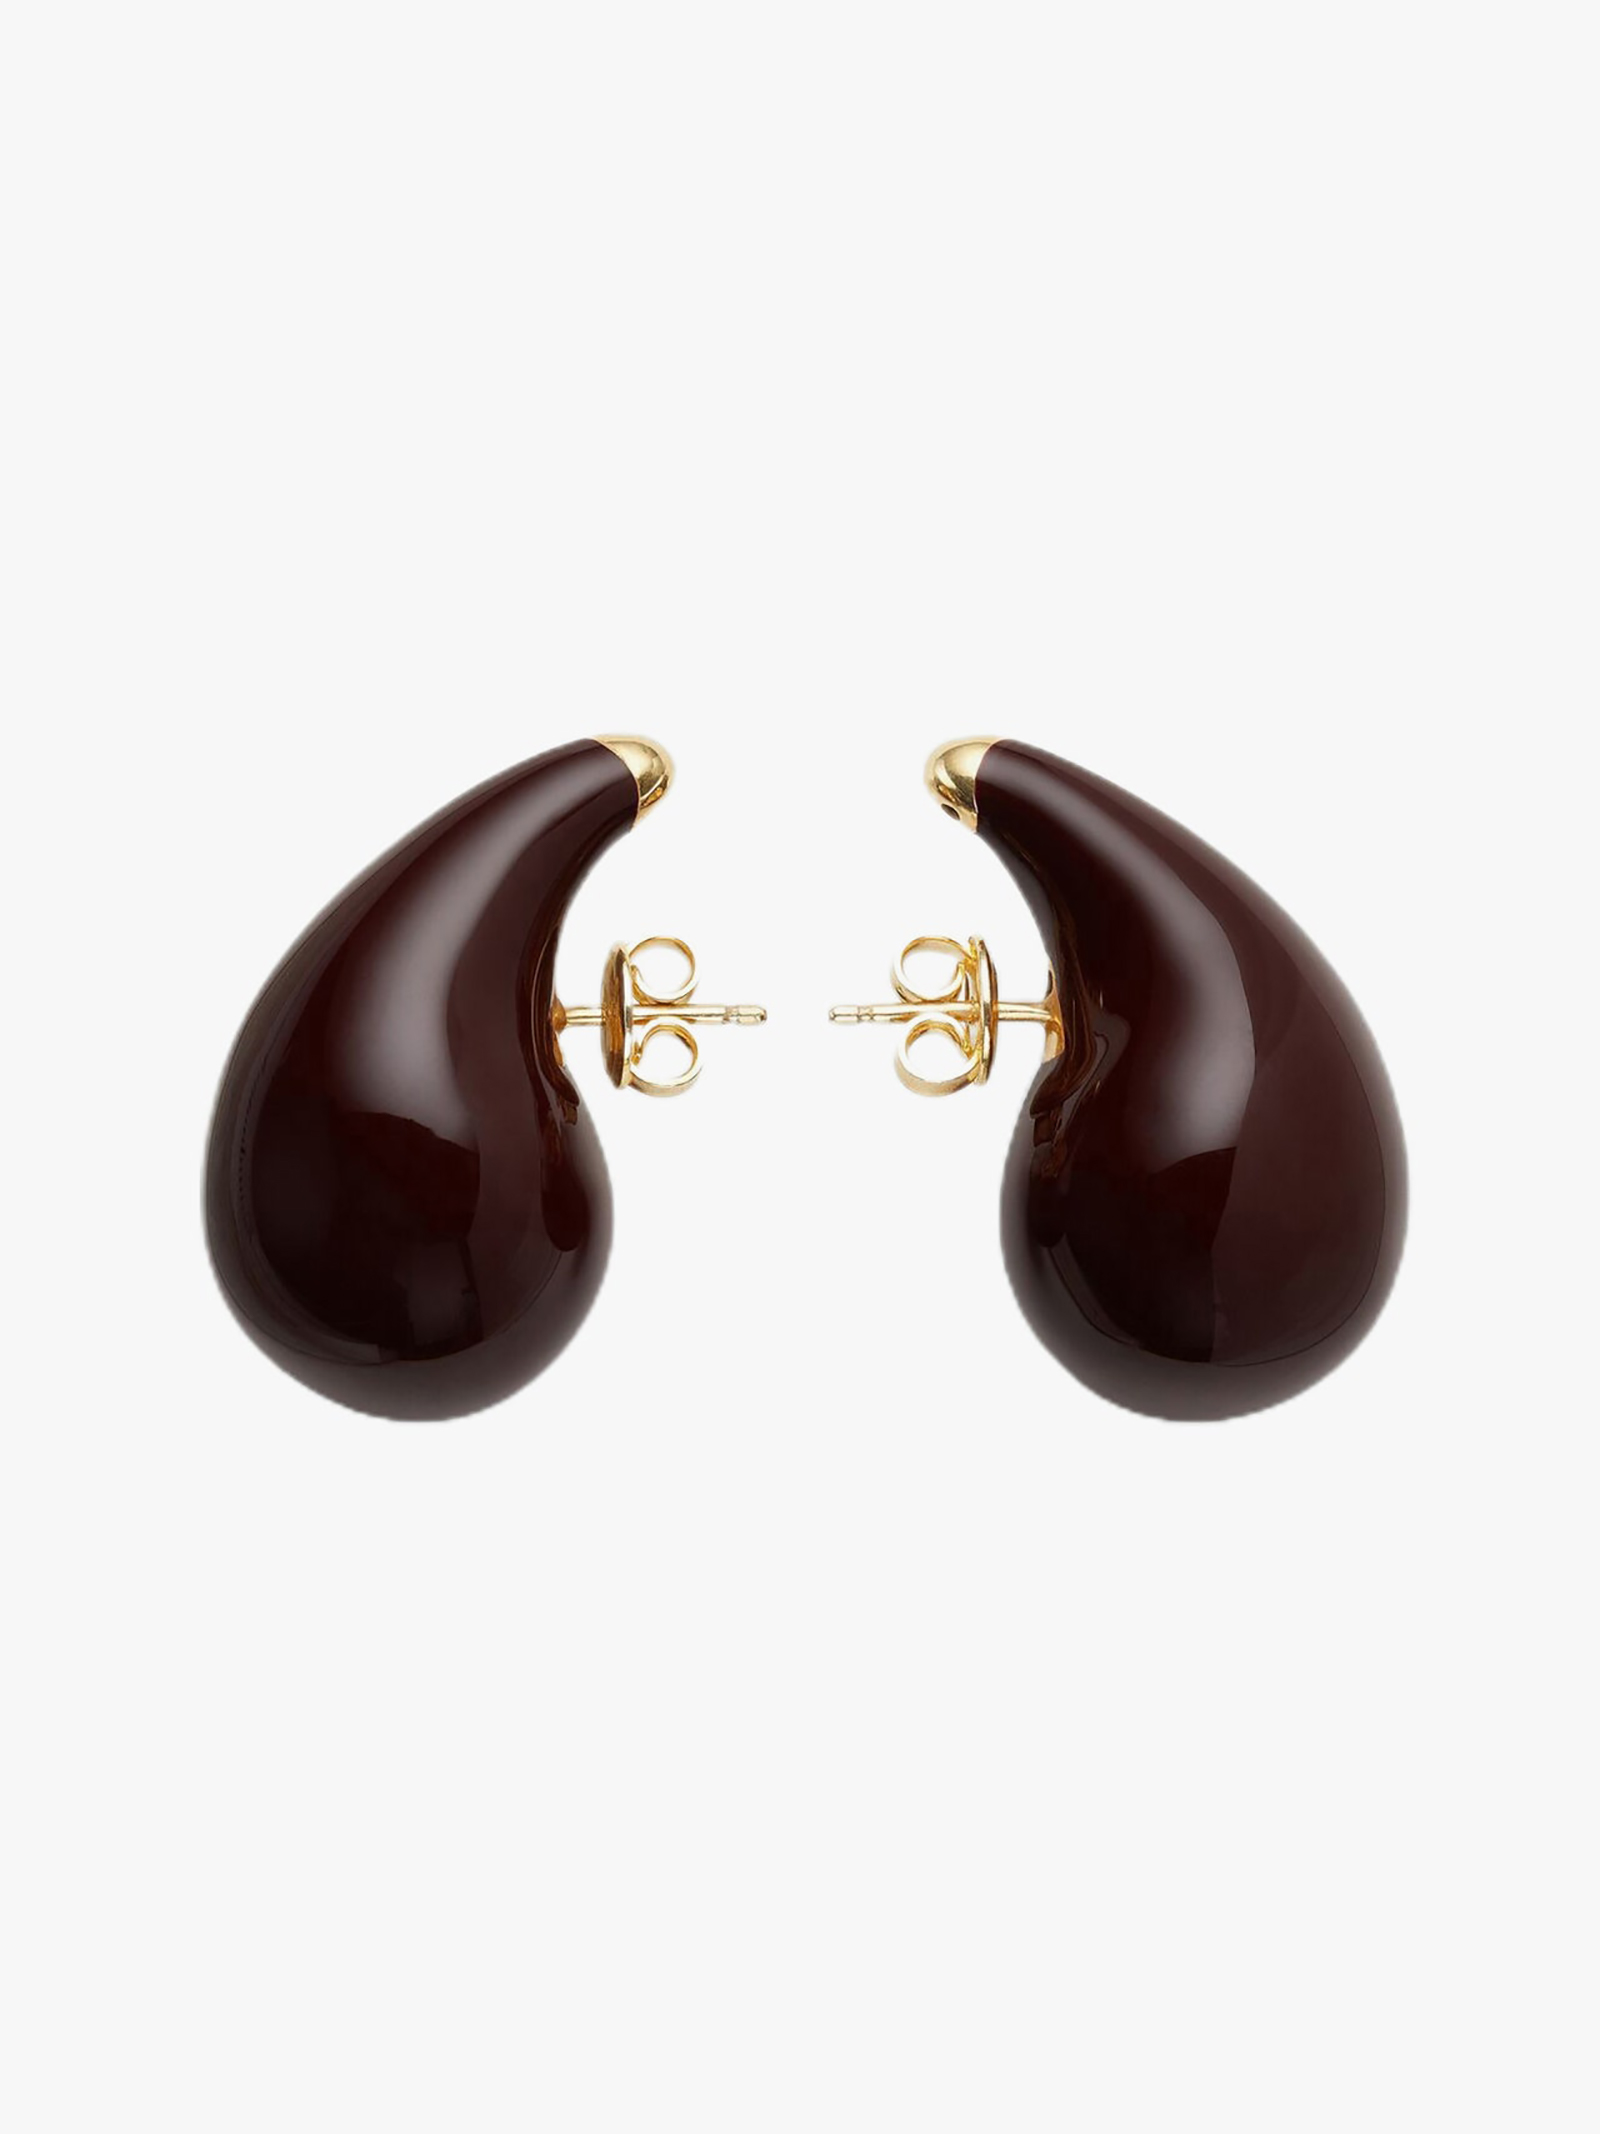 What’s Everybody Buying These Days? Bottega Veneta Drop Earrings | Jewelry